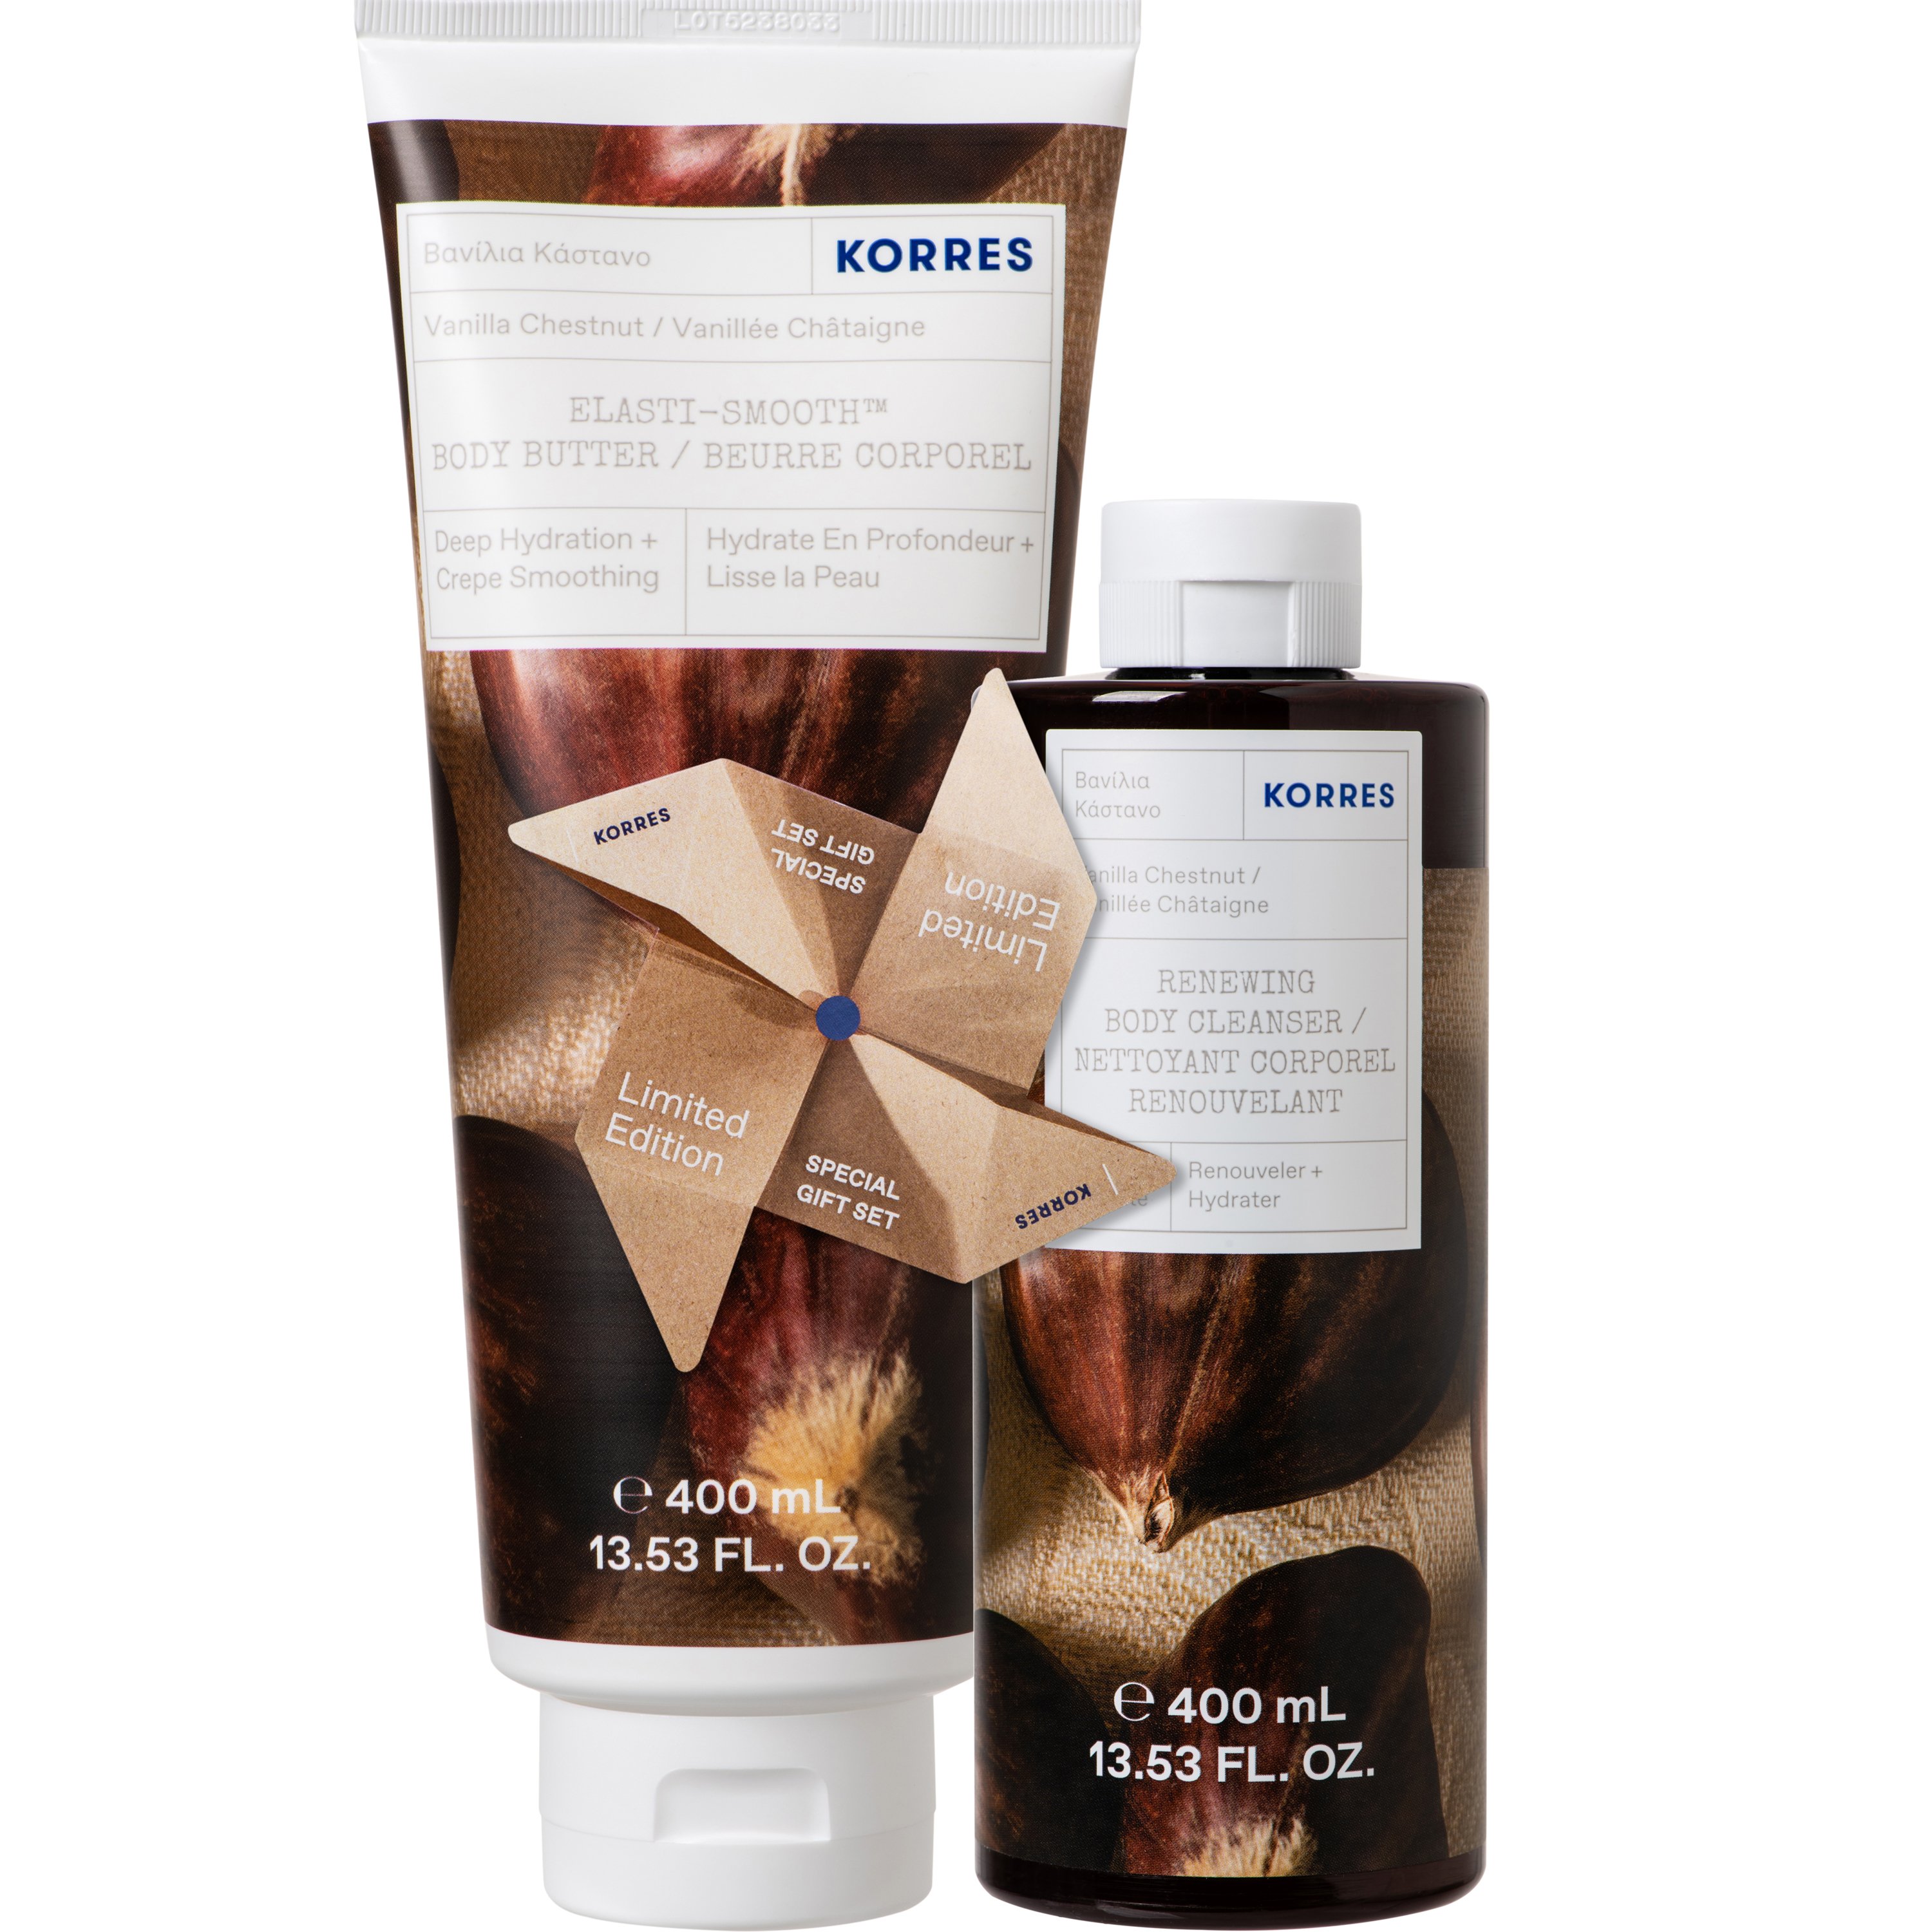 Korres Promo Renewing Body Cleanser Vanilla Chestnut Shower Gel 400ml & Elasti – Smooth Body Buttter 400ml